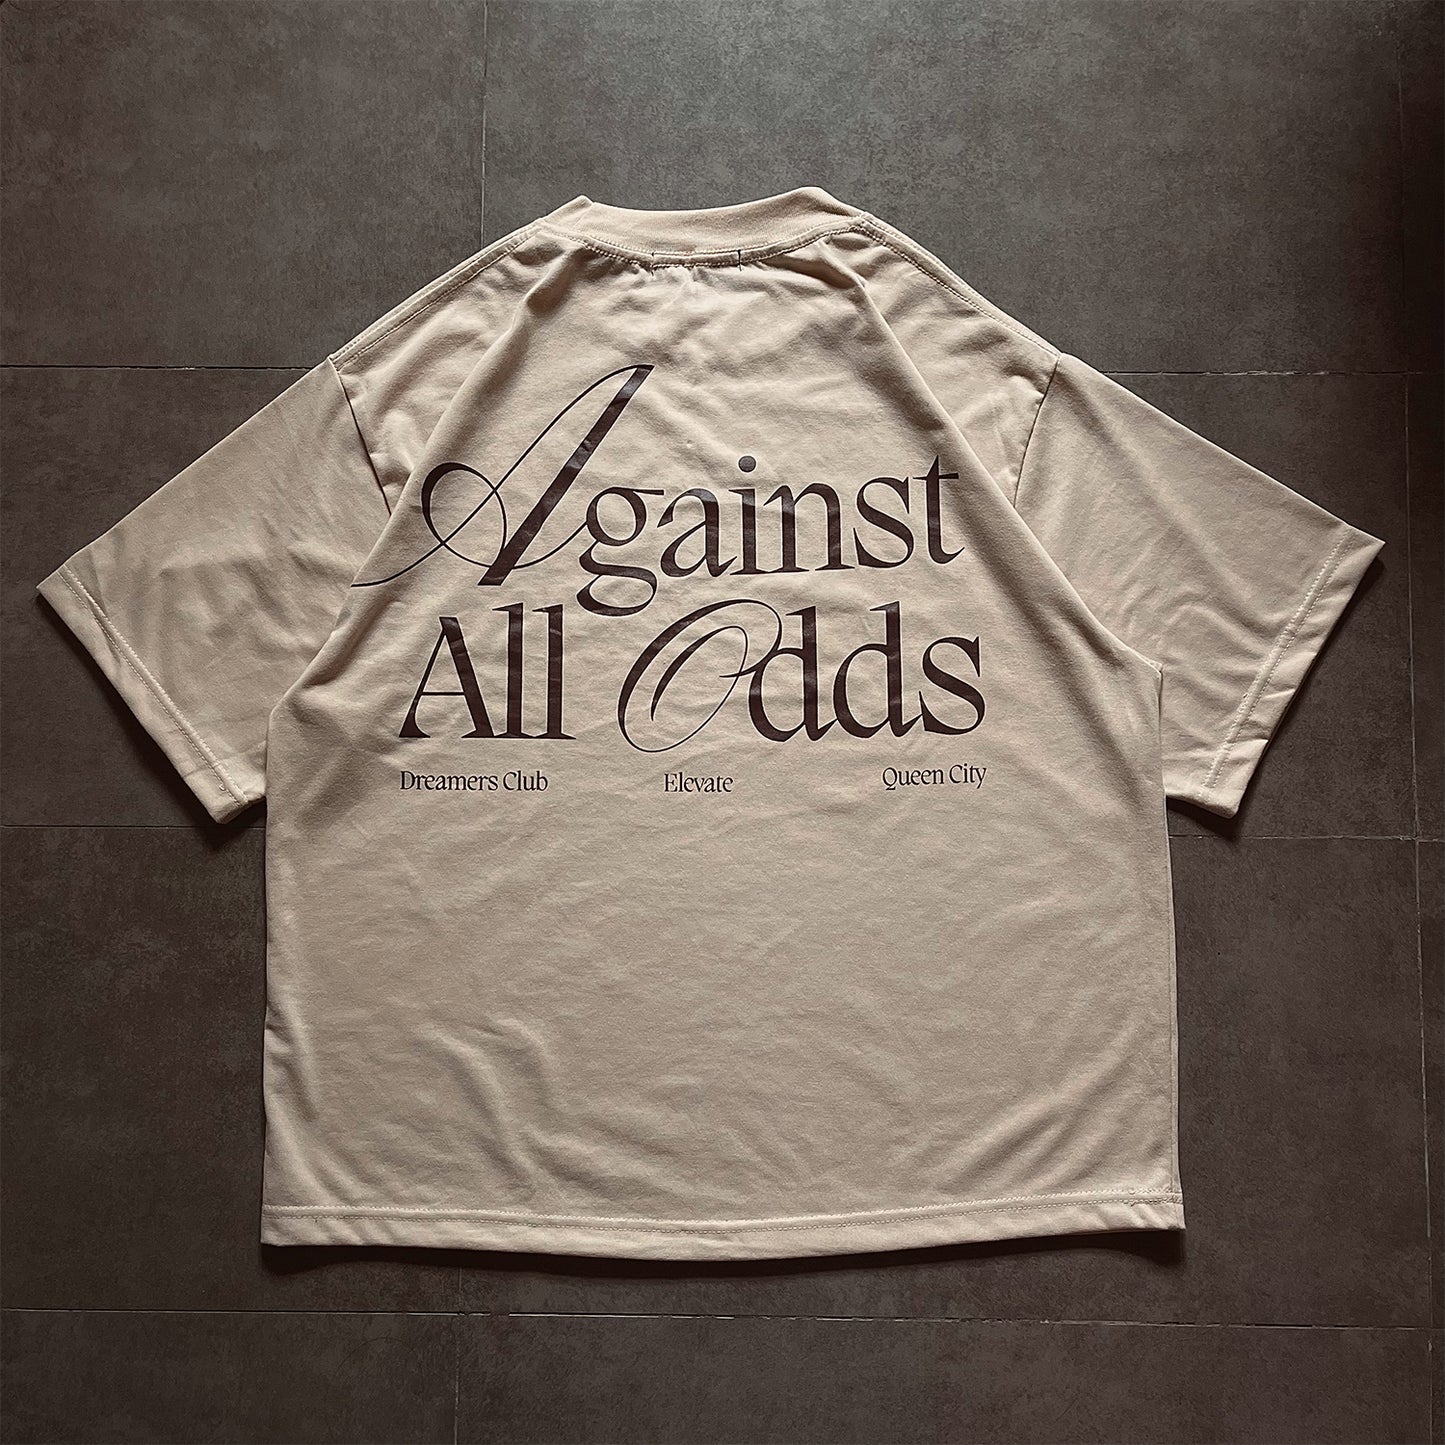 Against All Odds Shirt